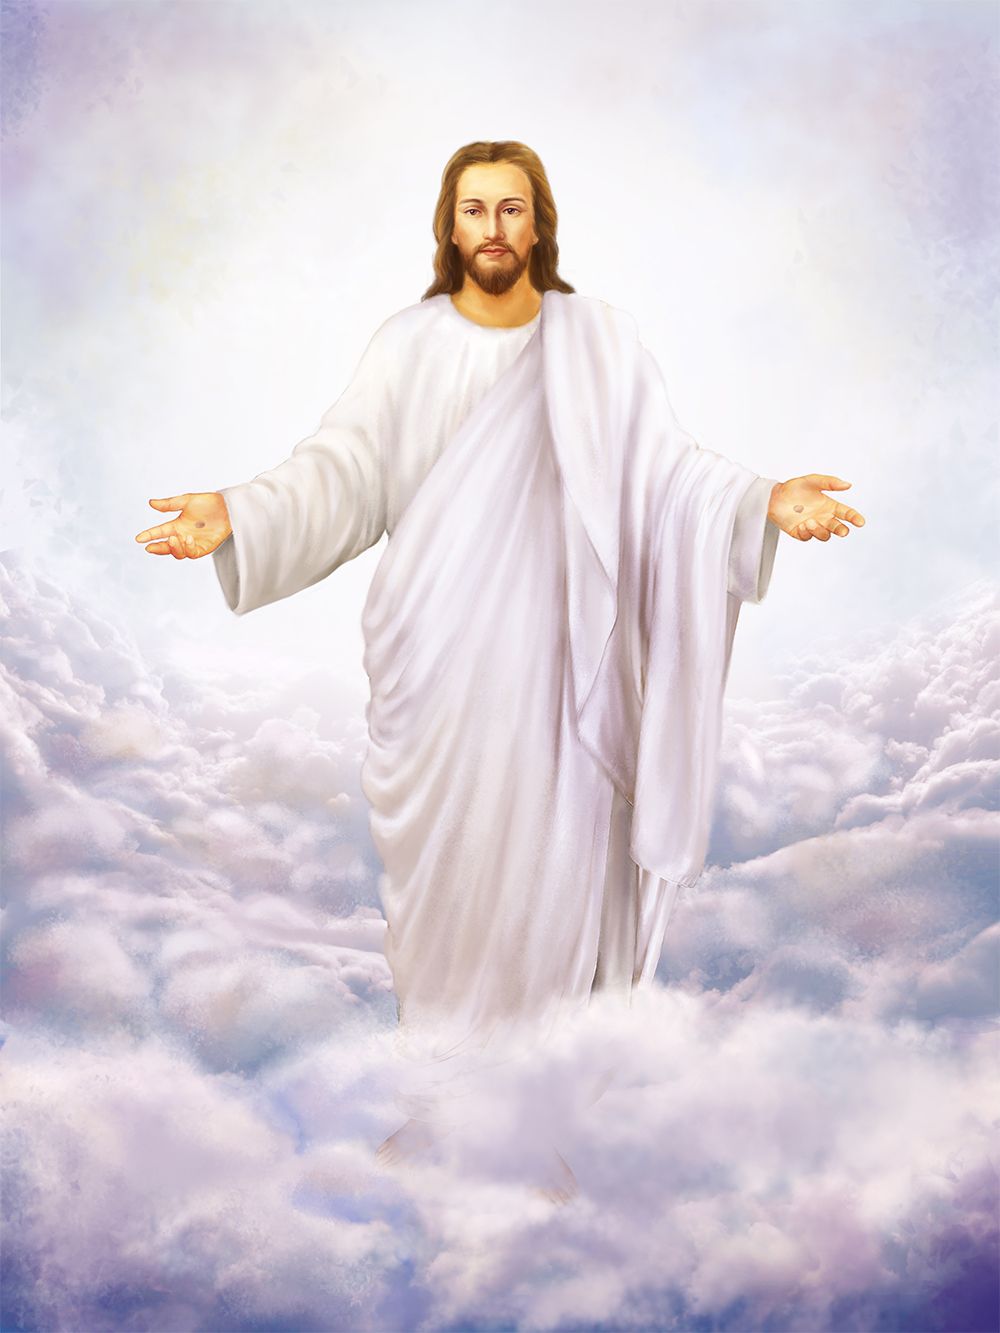 God Images Of Jesus - 1000x1333 Wallpaper 